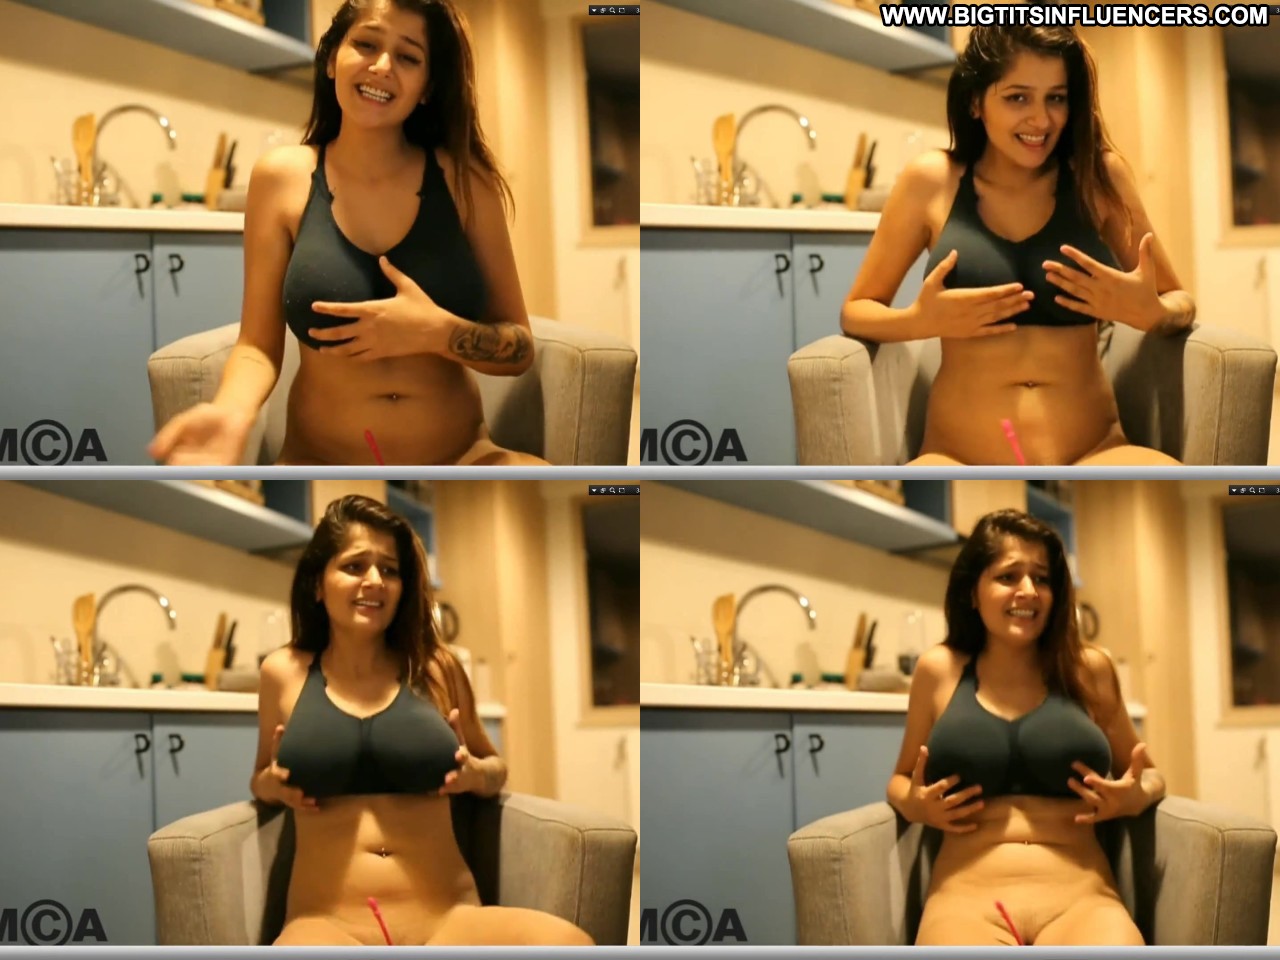 Julia Tica Real Video View Porn Hot Leaked Player Big Natural Tits - Big  Tits Influencers